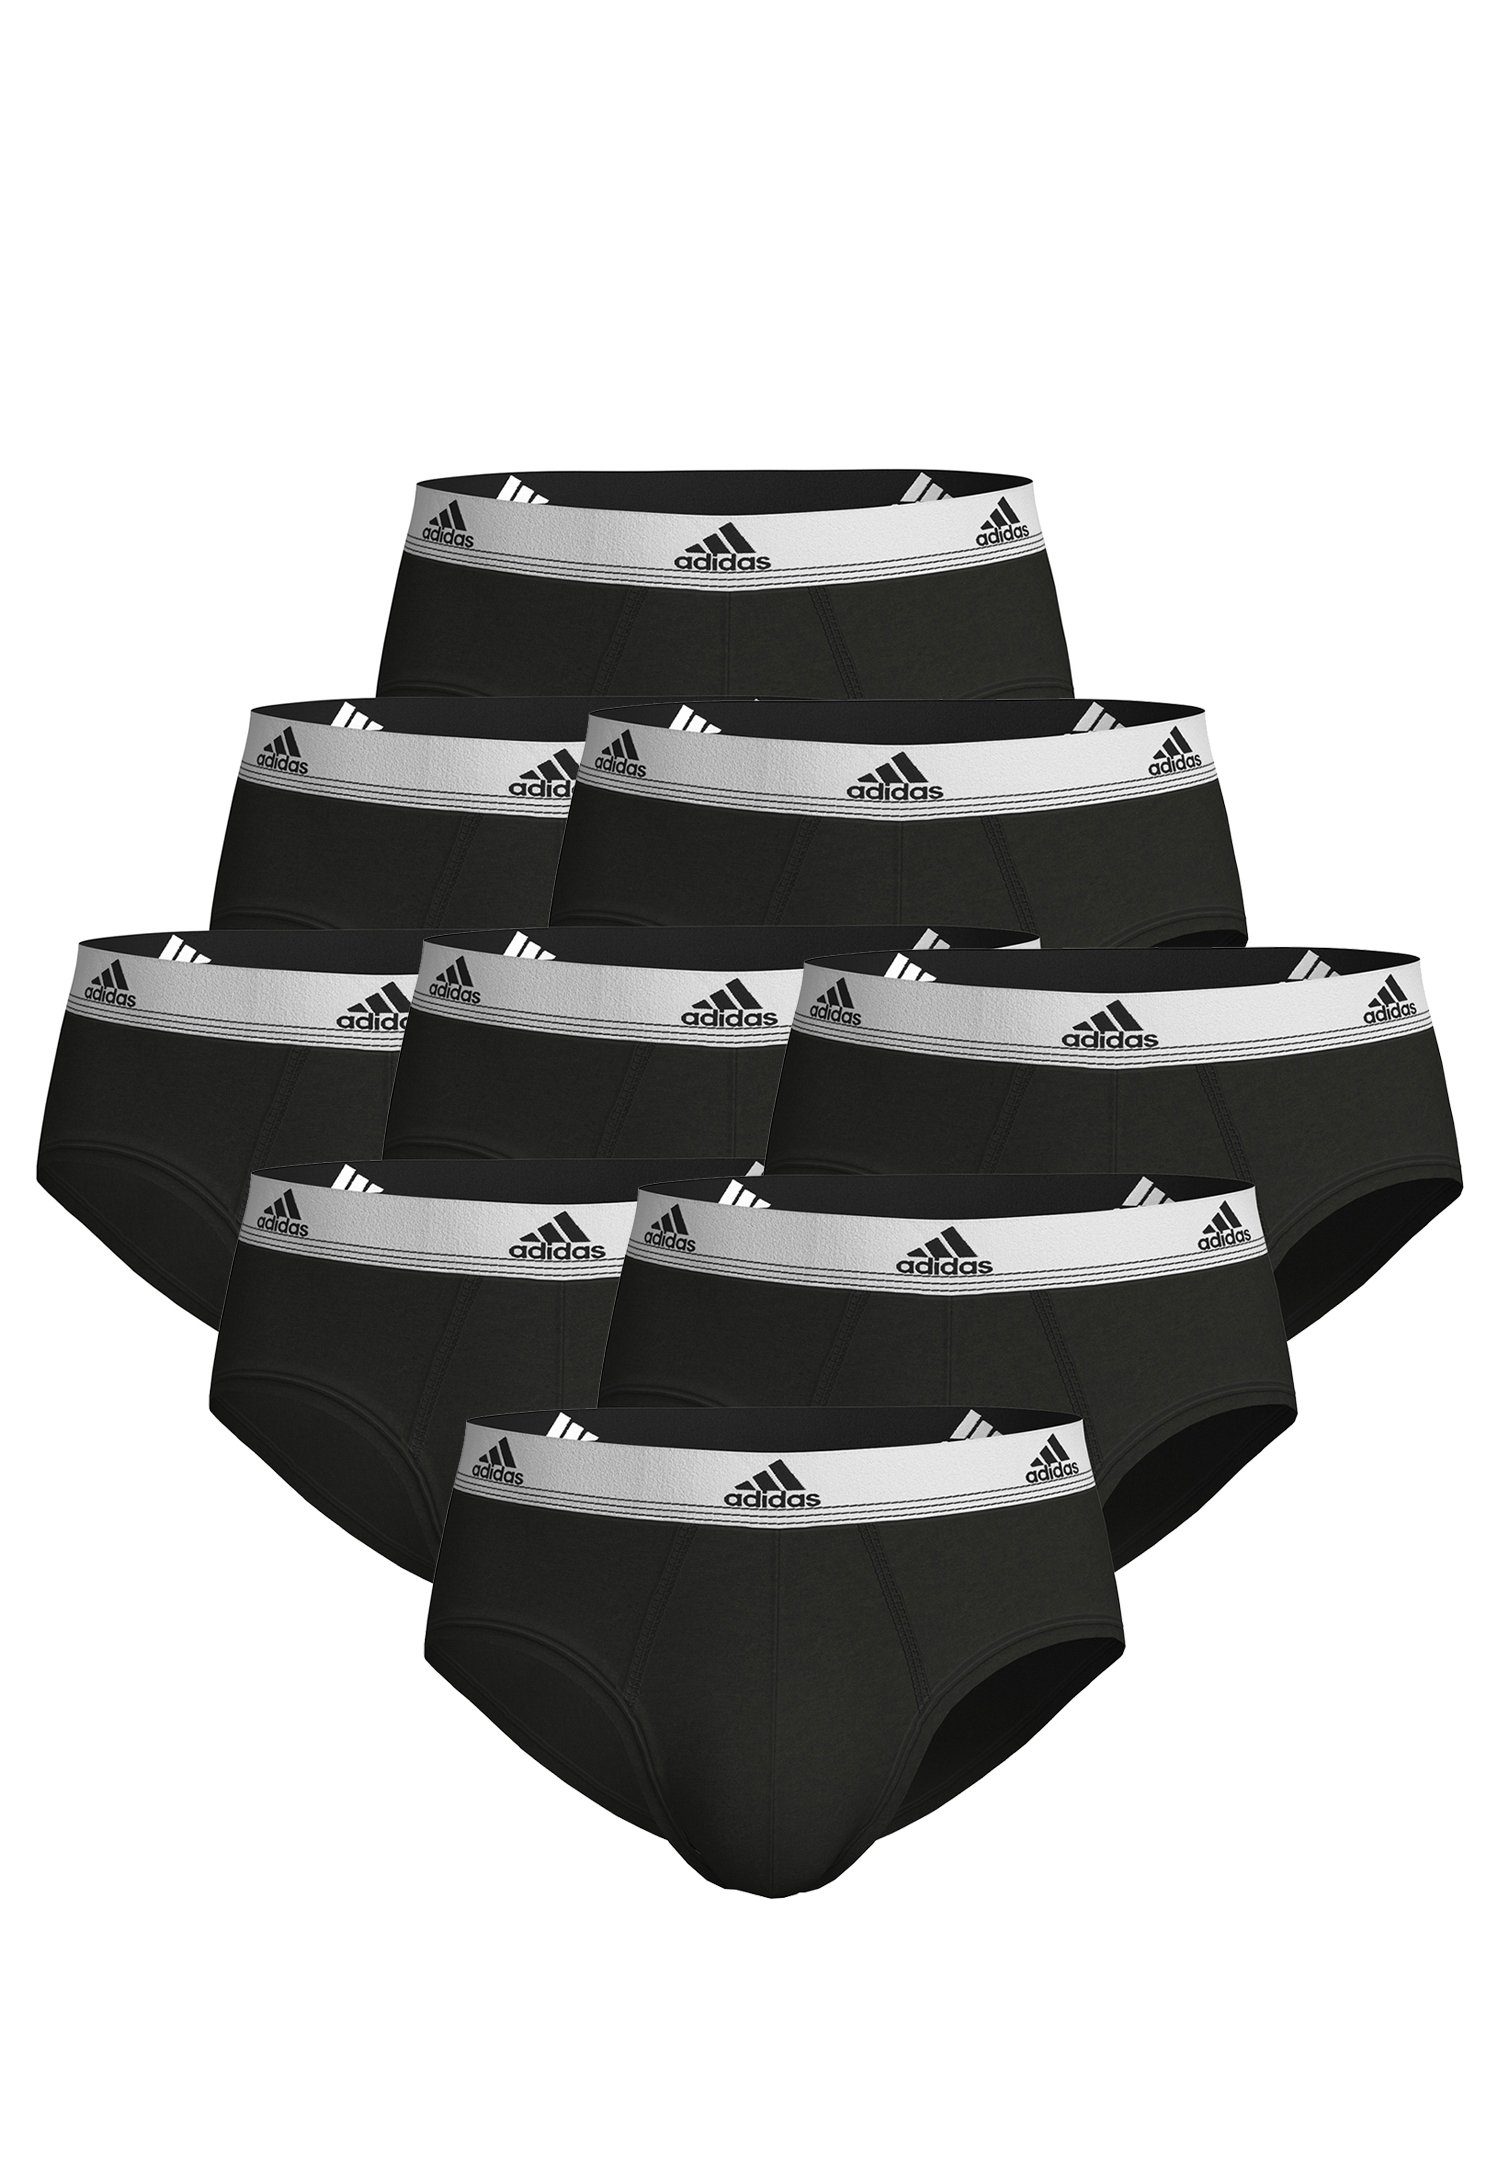 9er-Pack) (9PK) BRIEF adidas Boxershorts Performance Black2 9-St., (Packung,